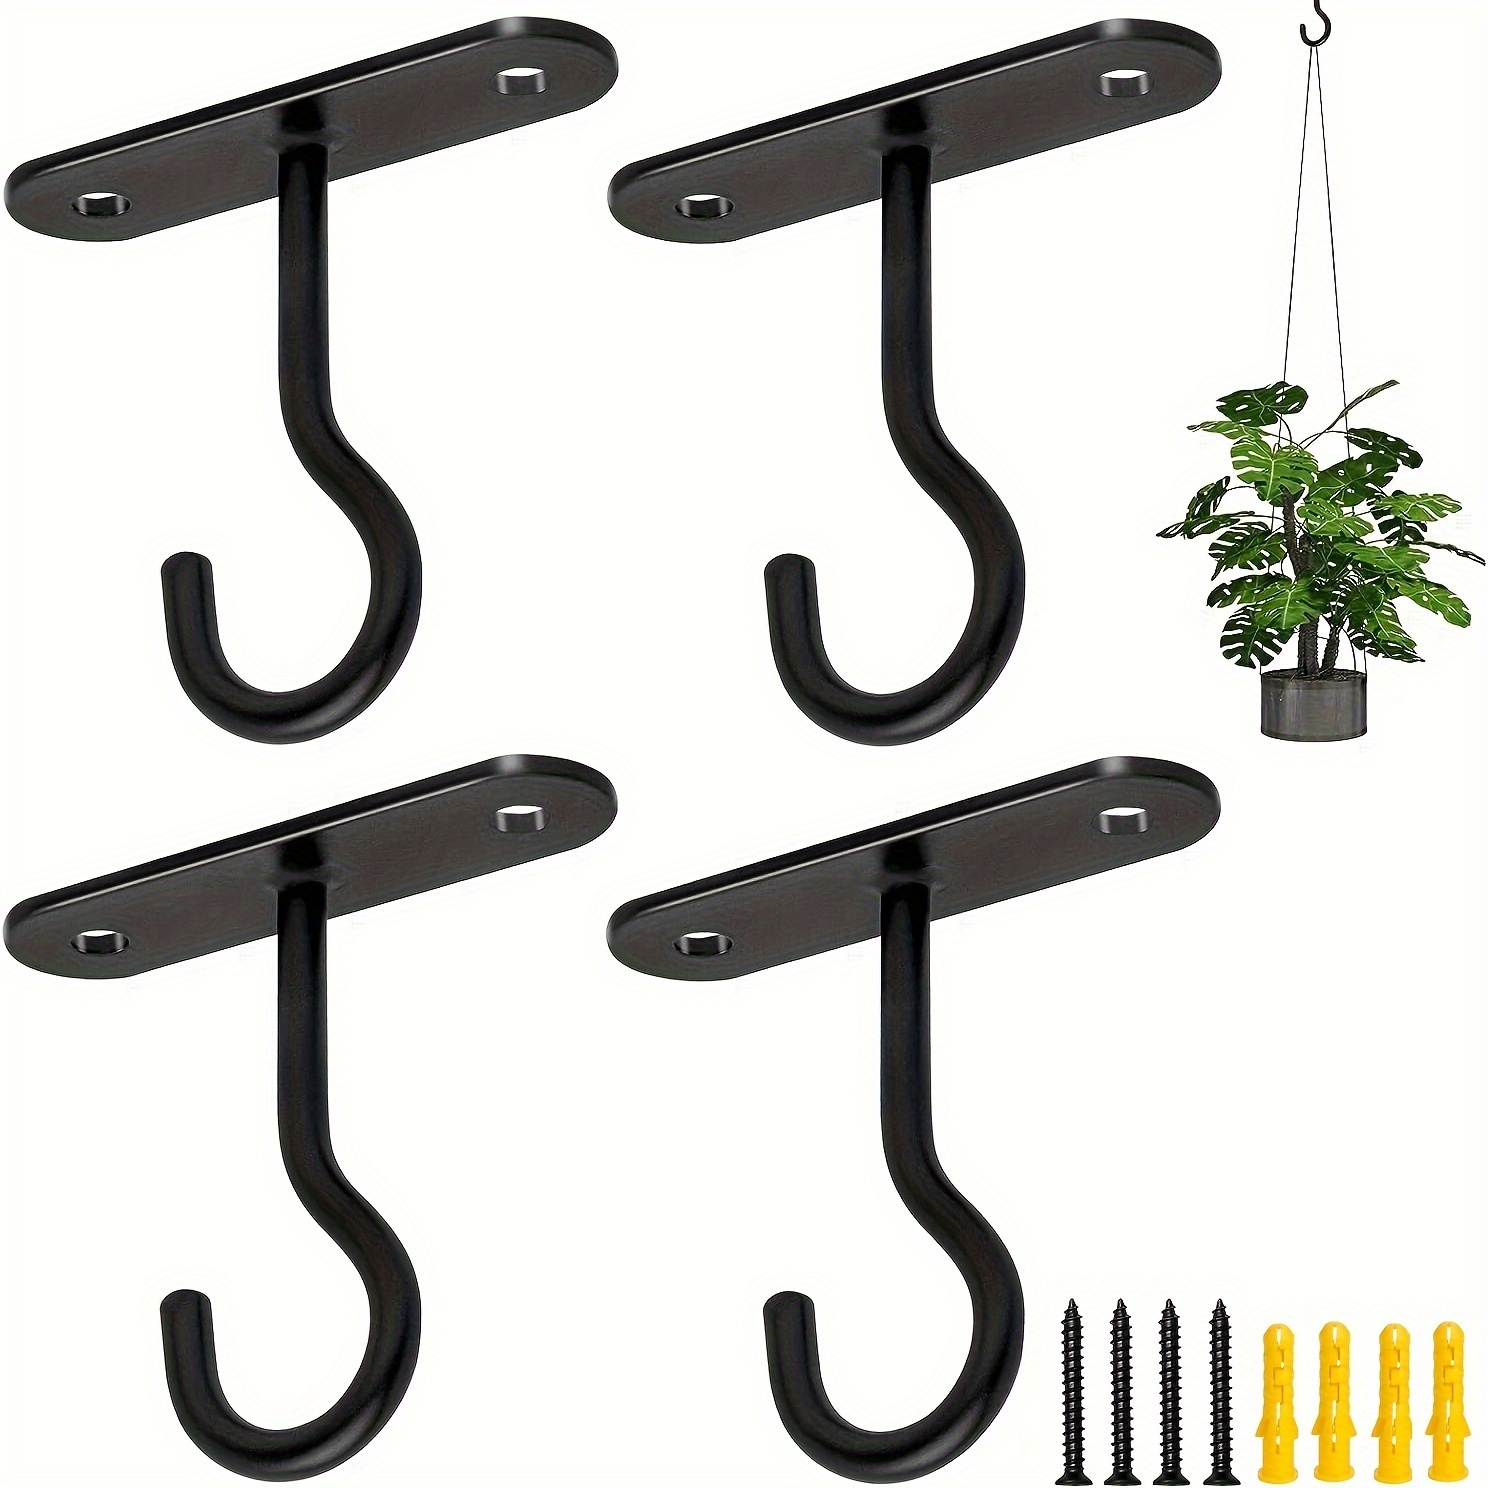 4pcs Ceiling Hooks For Hanging Plants Wall Mount Plant Hanger Hook Wall  Hooks For Bird Feeders Lights, Lanterns